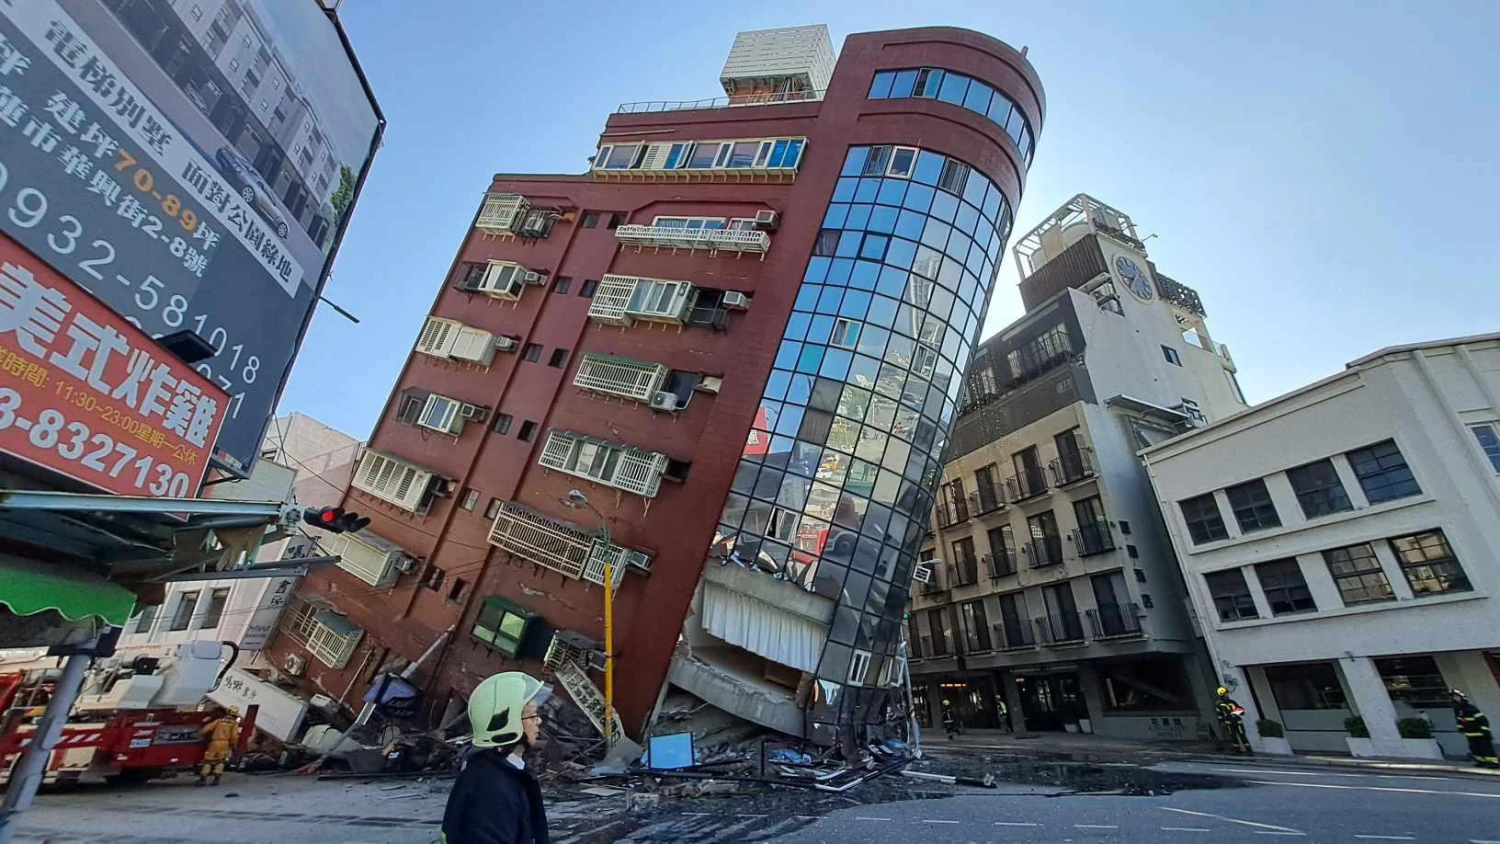 Taiwan earthquake